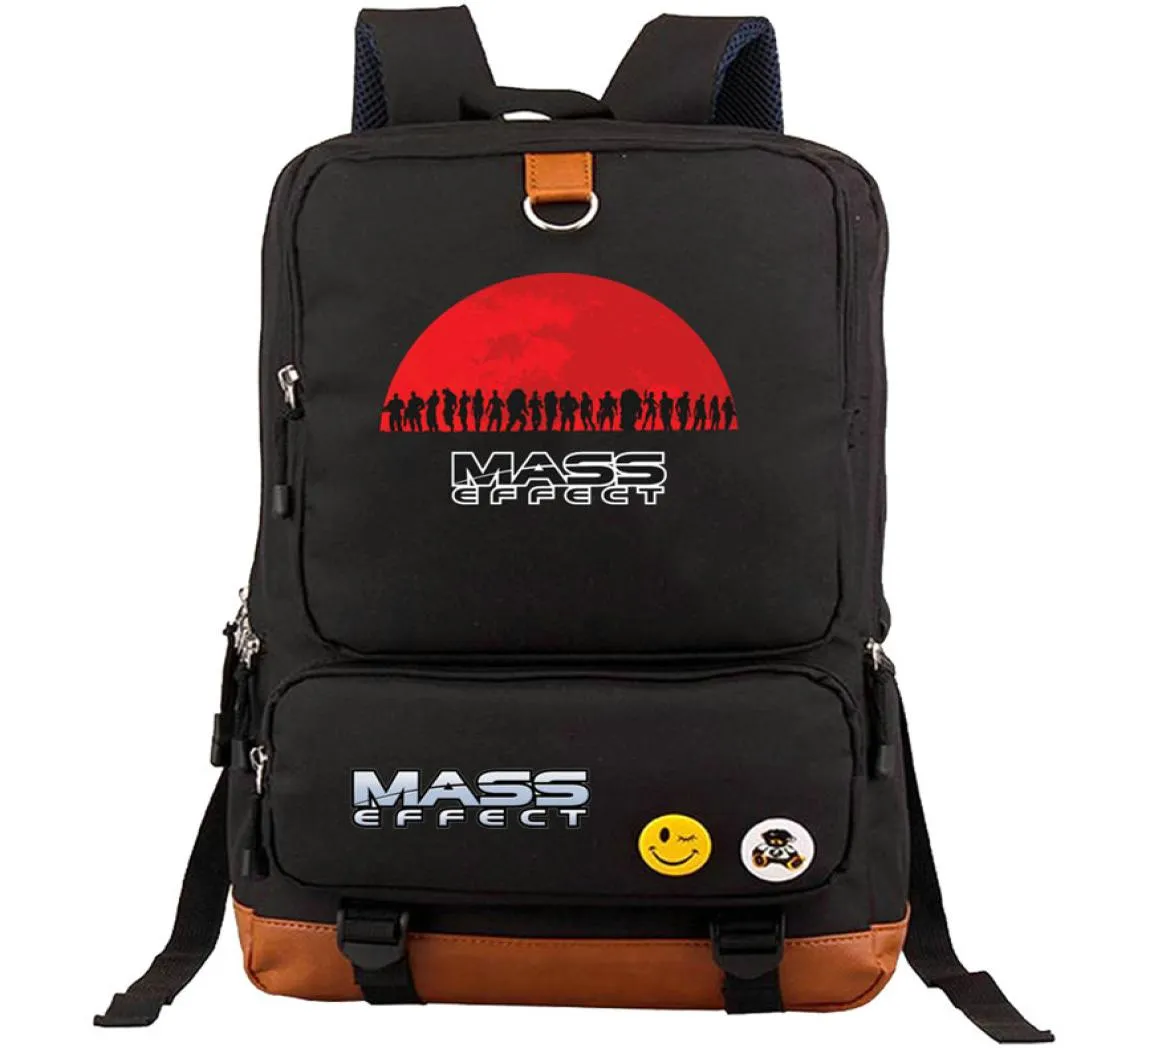 Mass effect backpack ME1 daypack Shoot N7 game schoolbag Quality rucksack Sport school bag Outdoor day pack2015138